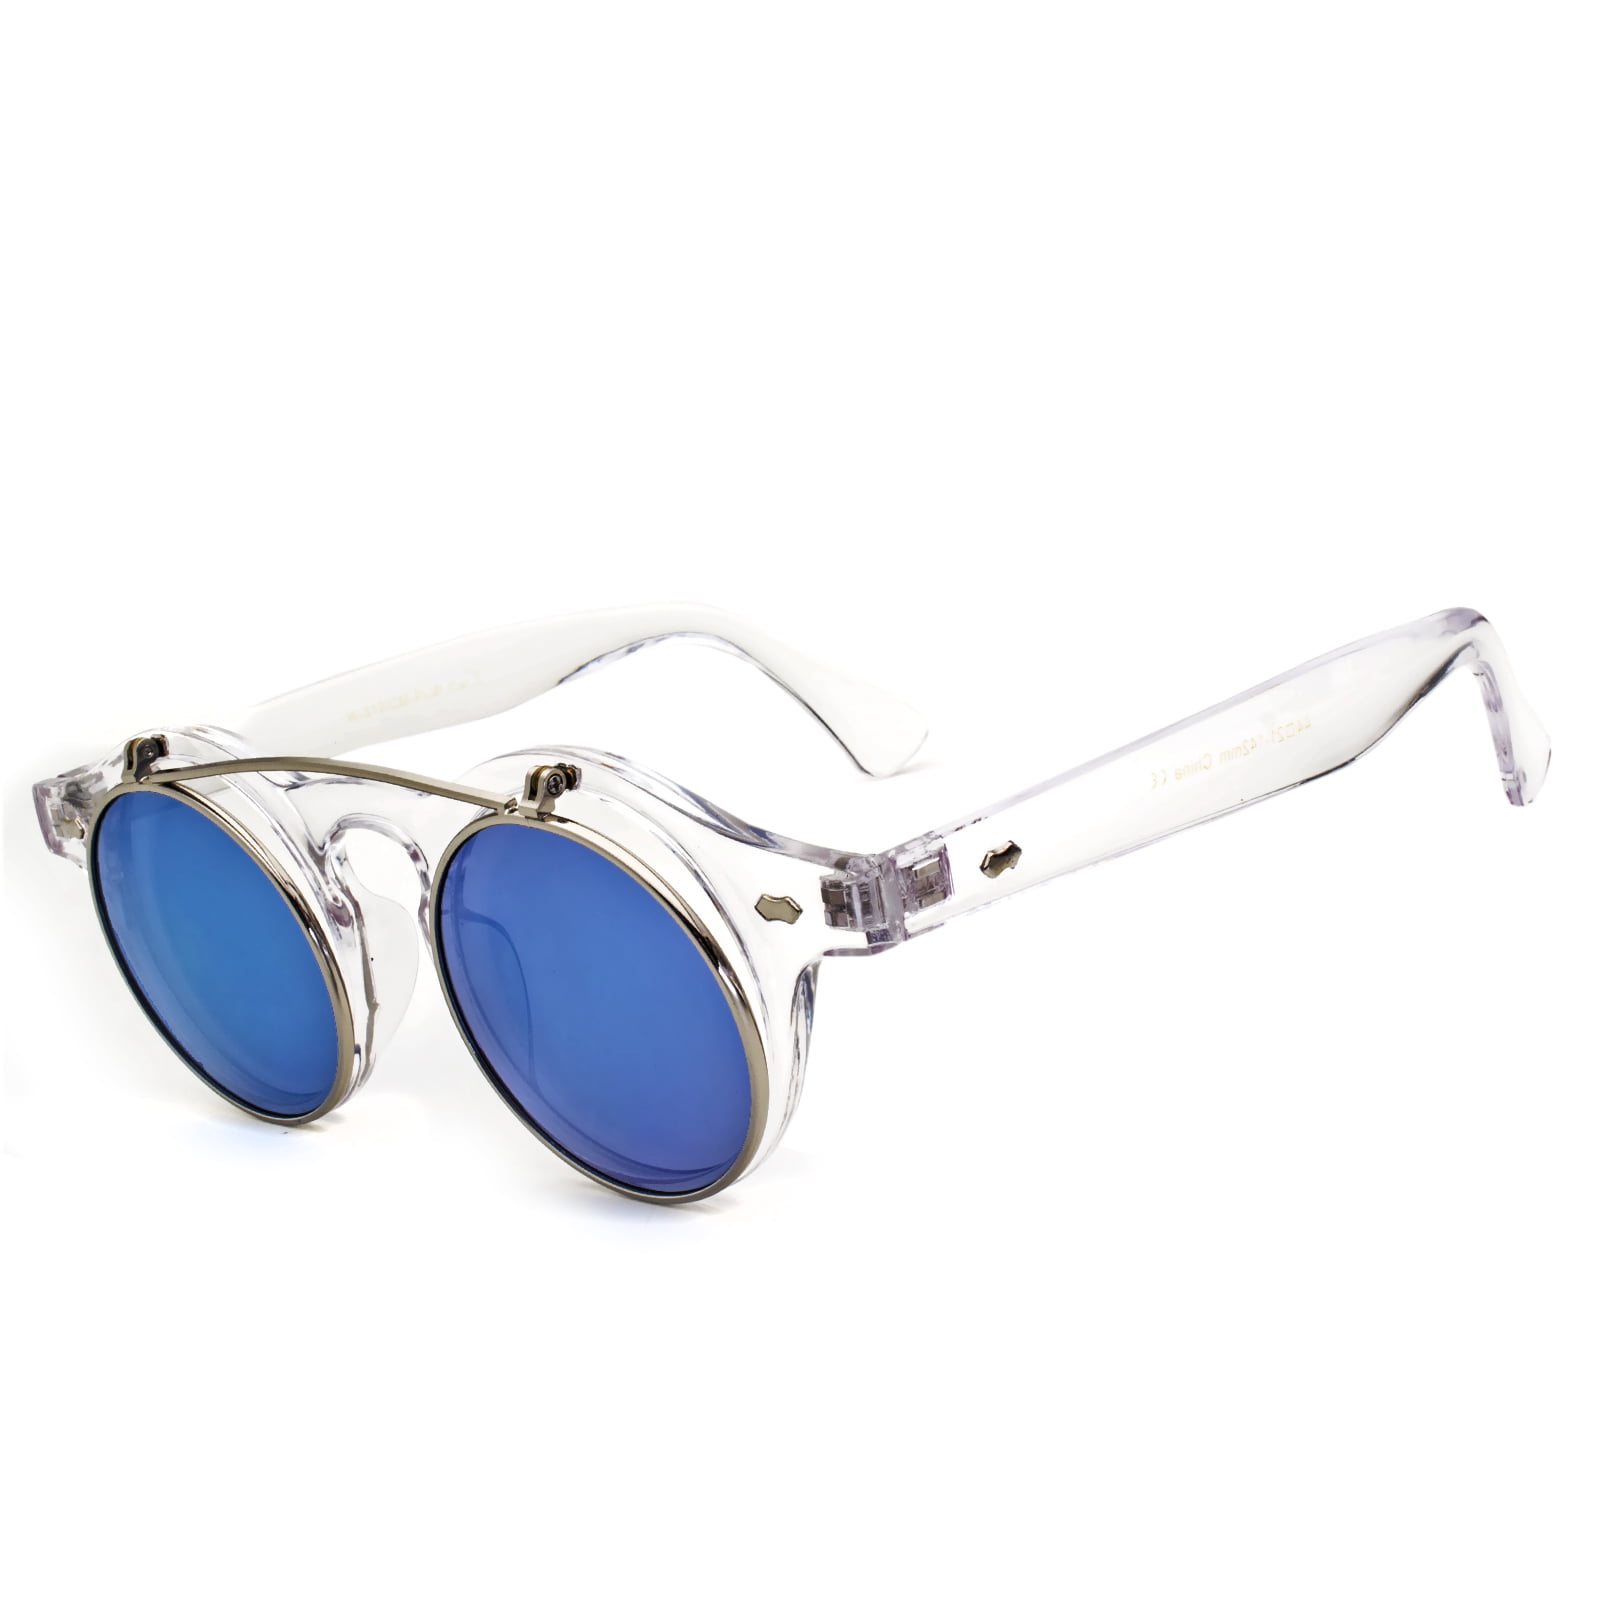 Cool Flip Up Lens Steampunk Vintage Retro Round Sunglasses Free Pouch w 